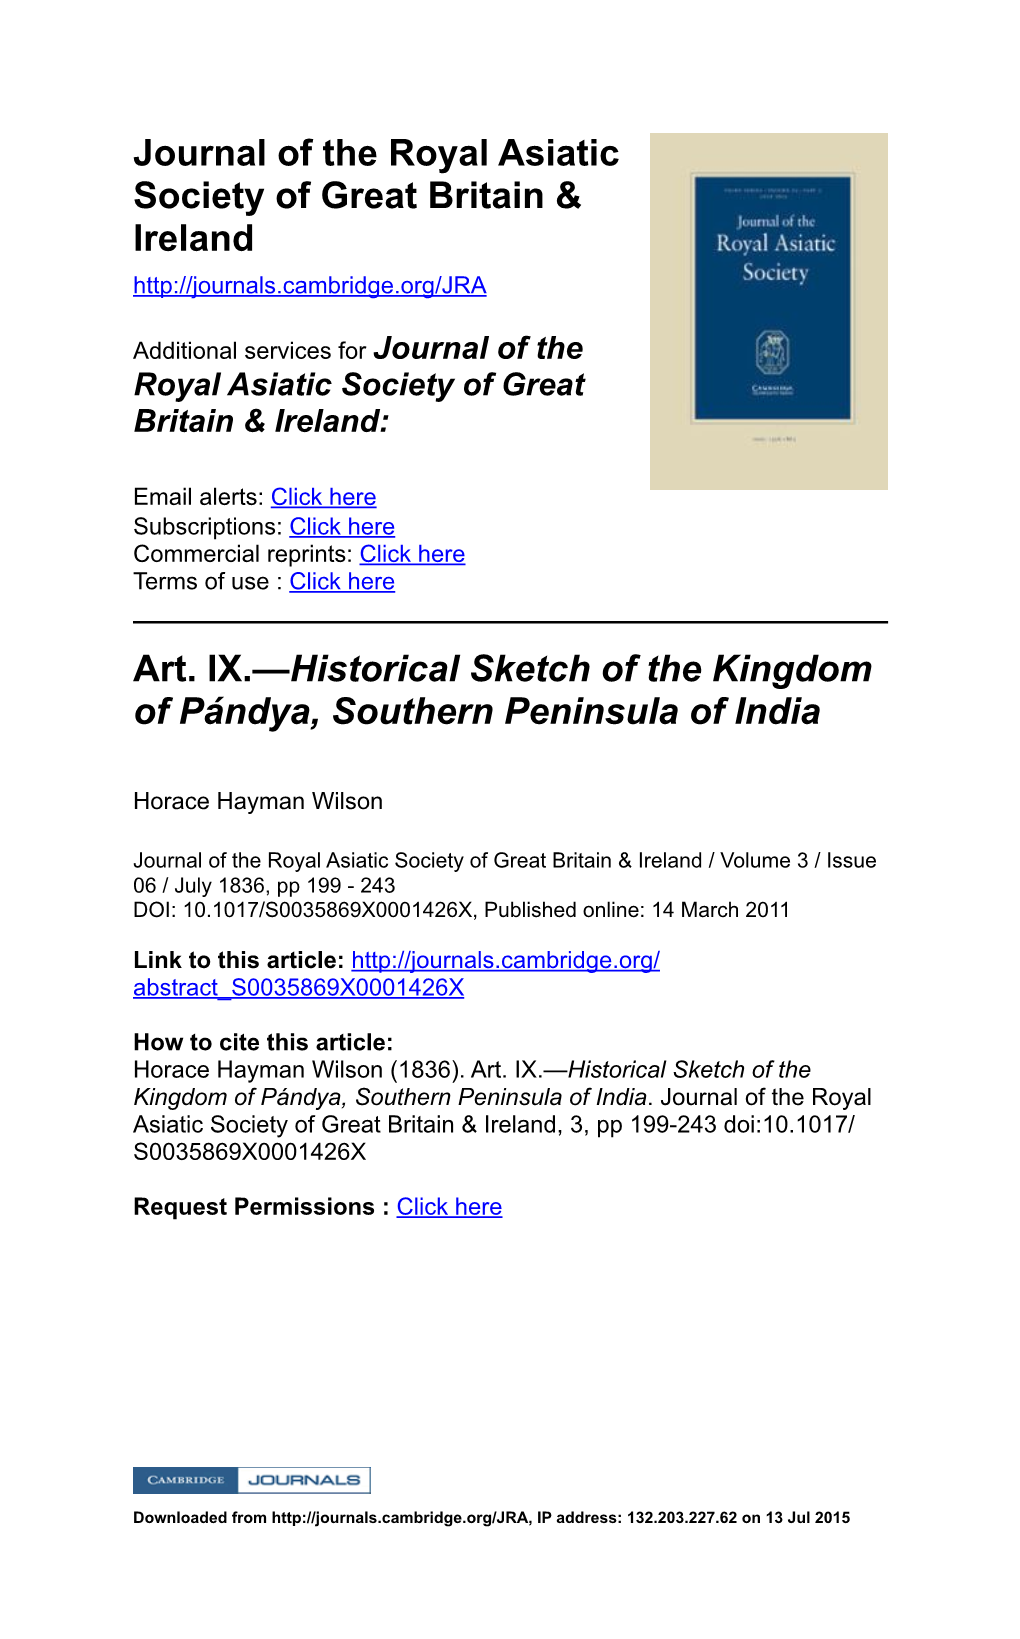 Art. IX.— Historical Sketch of the Kingdom of Pándya, Southern